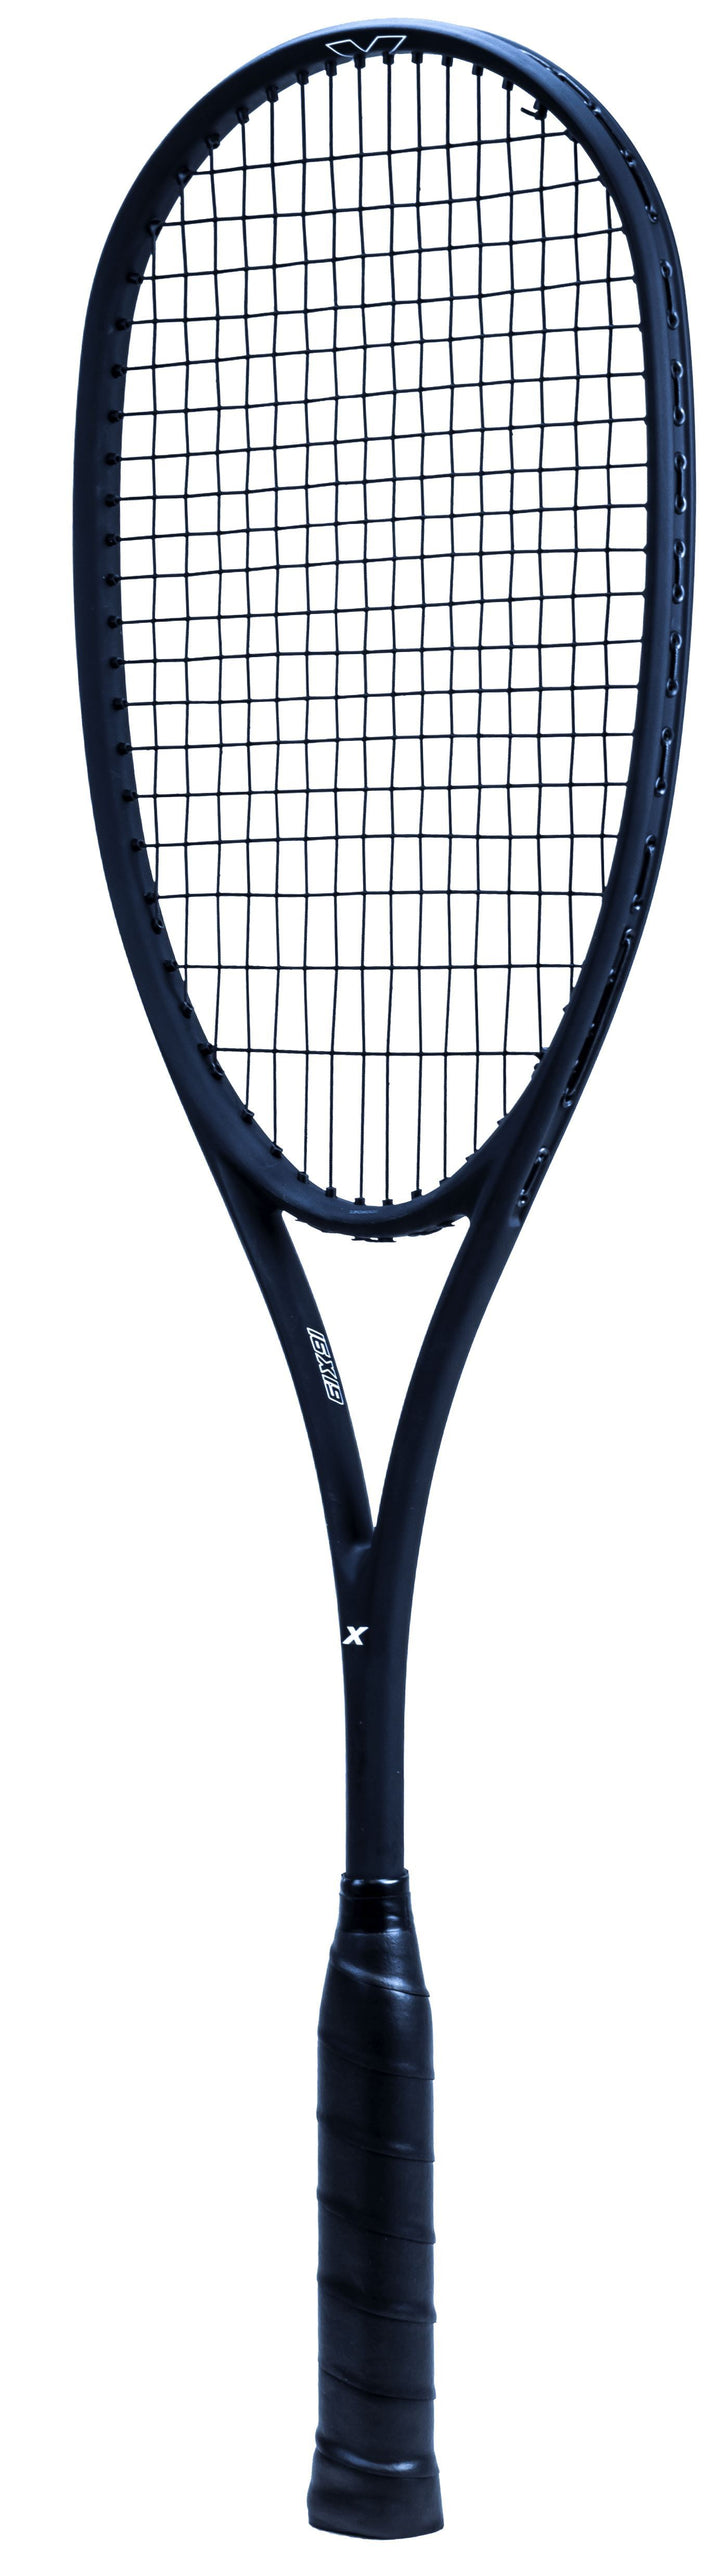 Xamsa Obsidian eXposed 16x19 Squash Racquet Squash Racquets Xamsa Strung with Xamsa PM18 